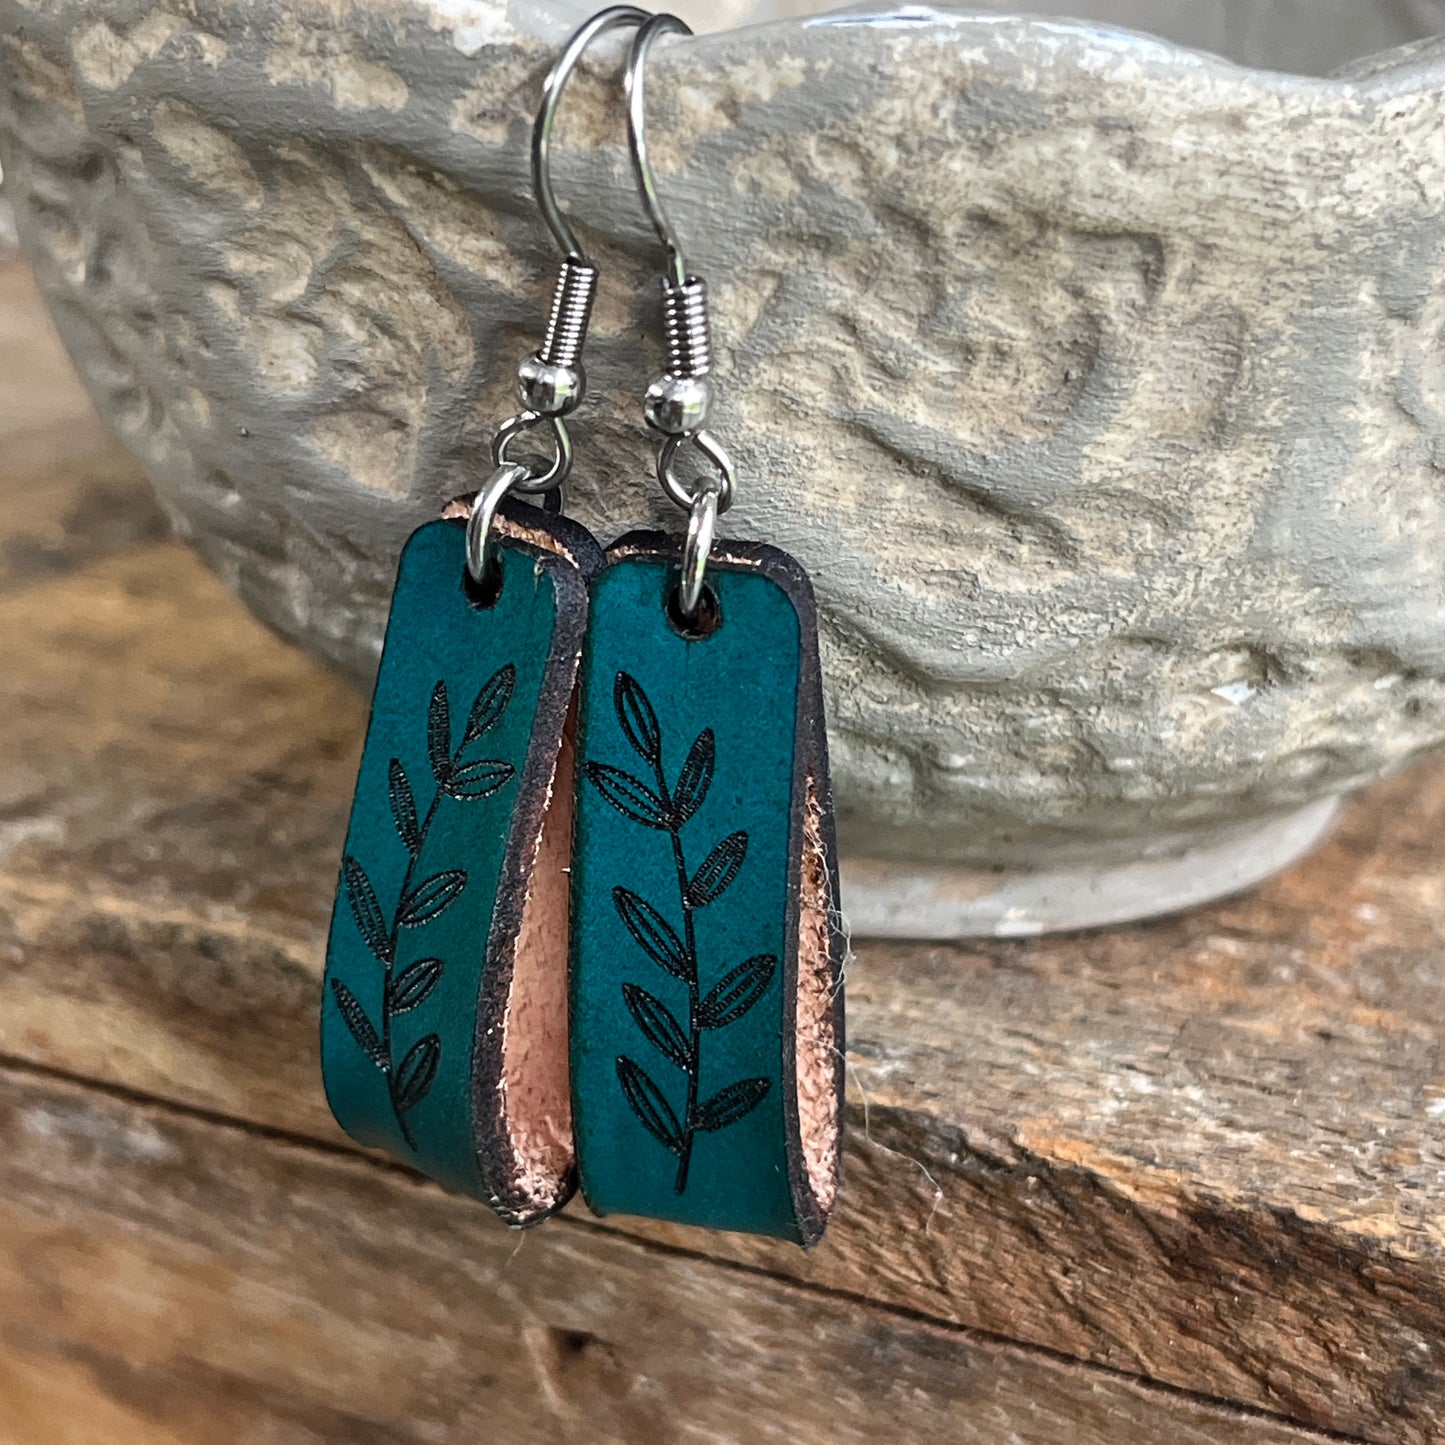 Boho Turquoise Leather Engraved Earrings with Leaf Design, Modern Loop Earrings